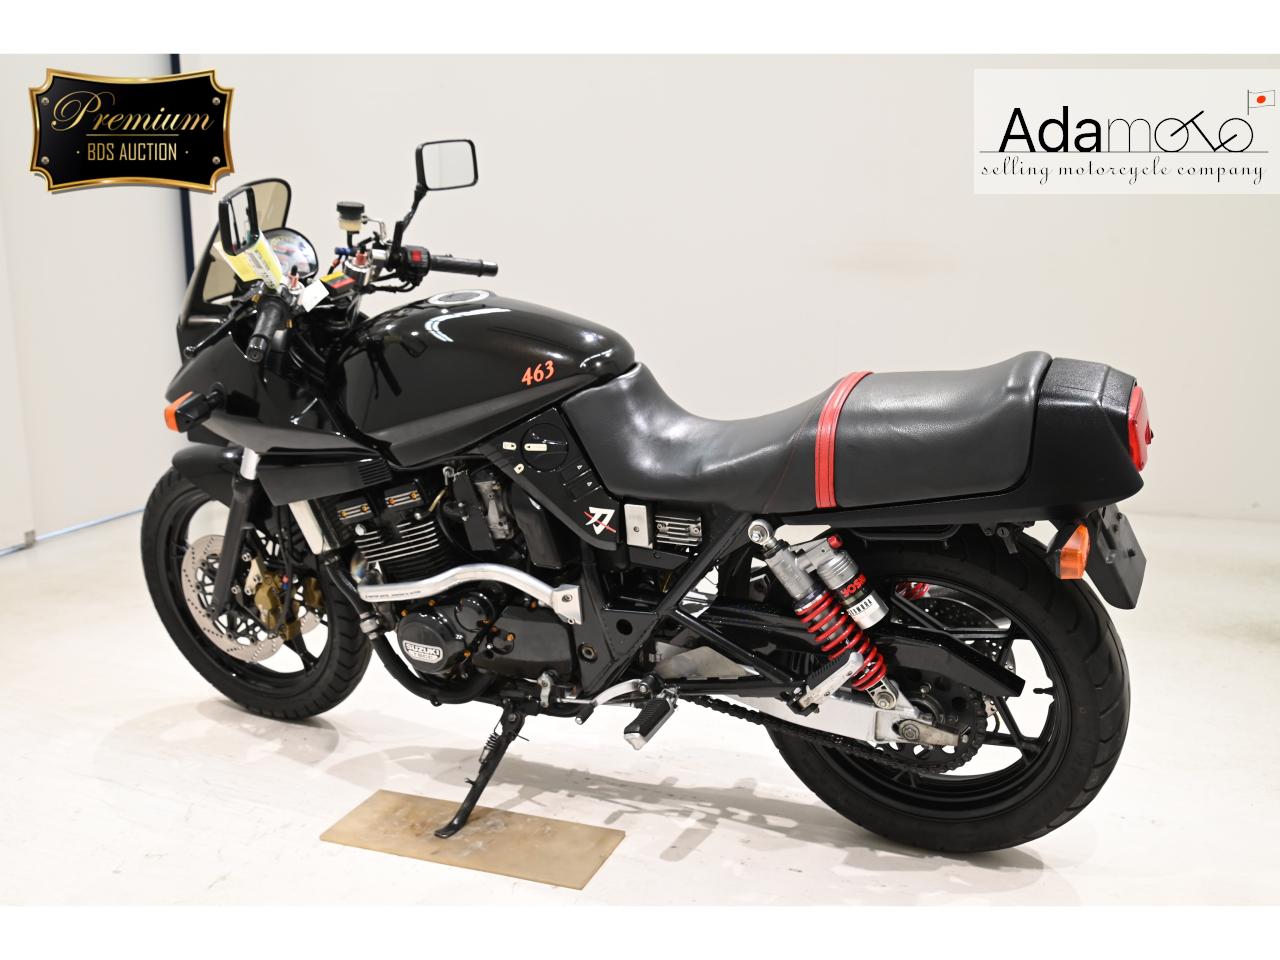 Suzuki GSX400S KATANA - Adamoto - Motorcycles from Japan